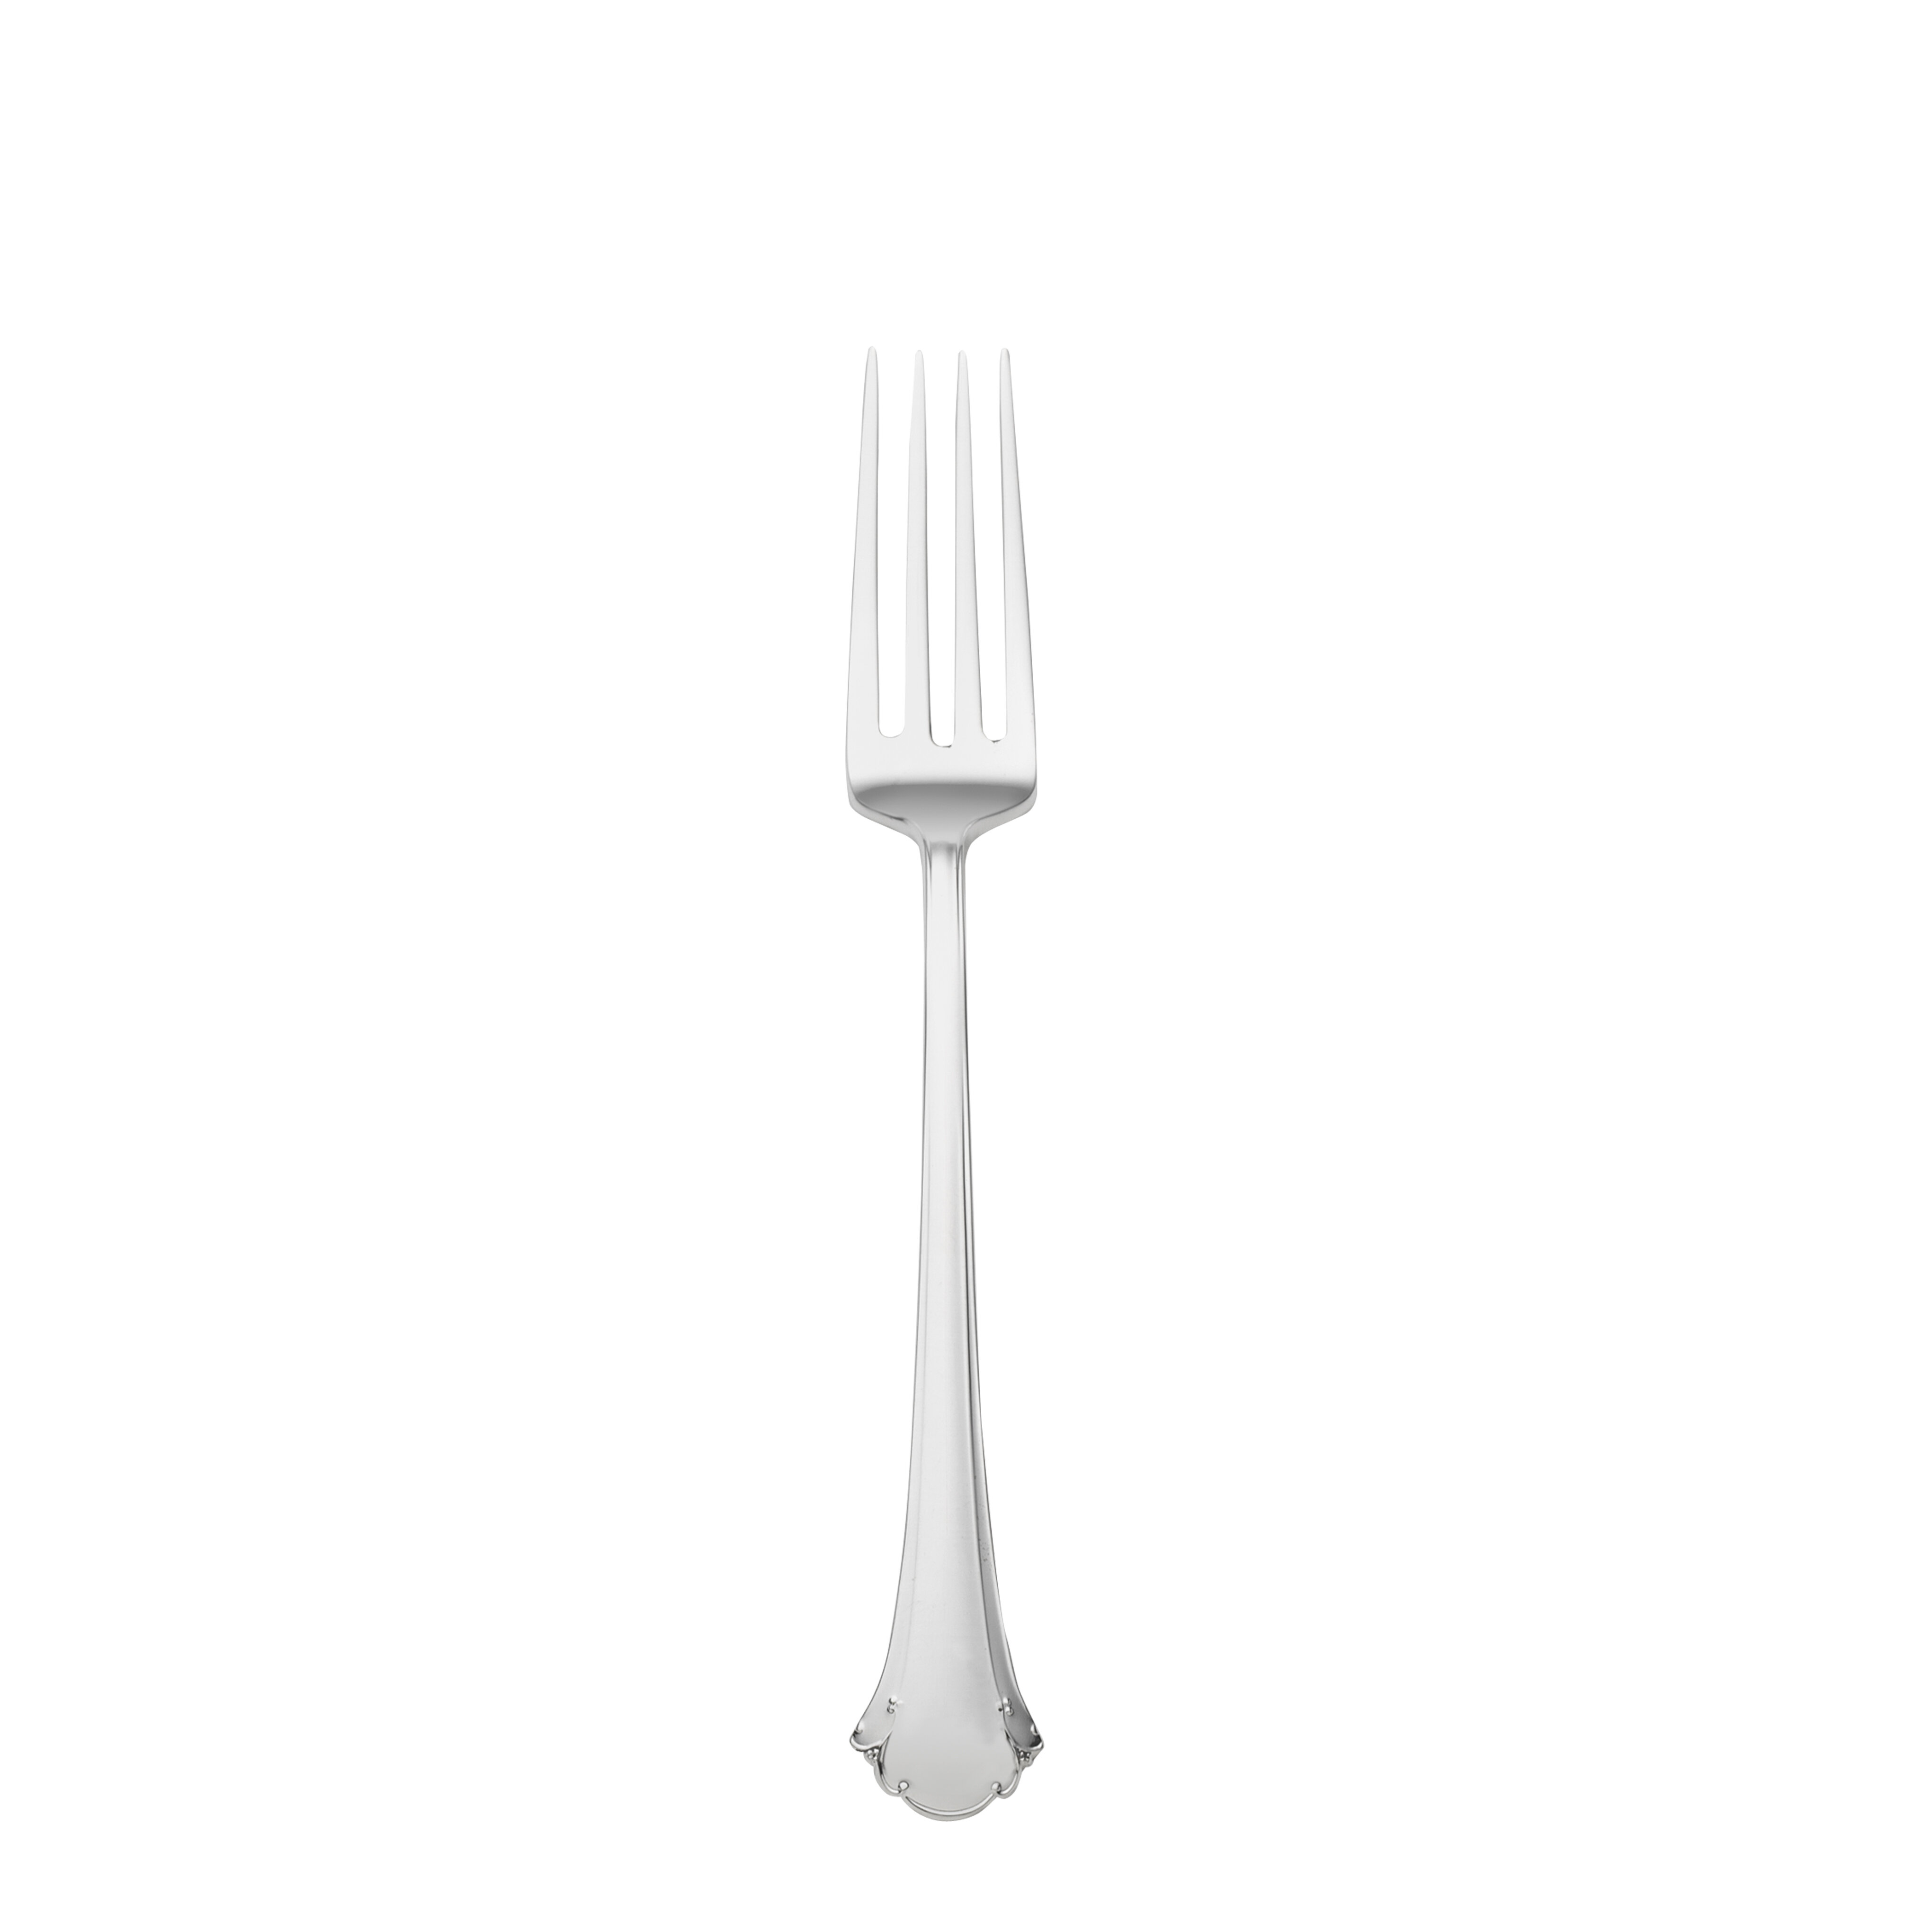 18th century fork